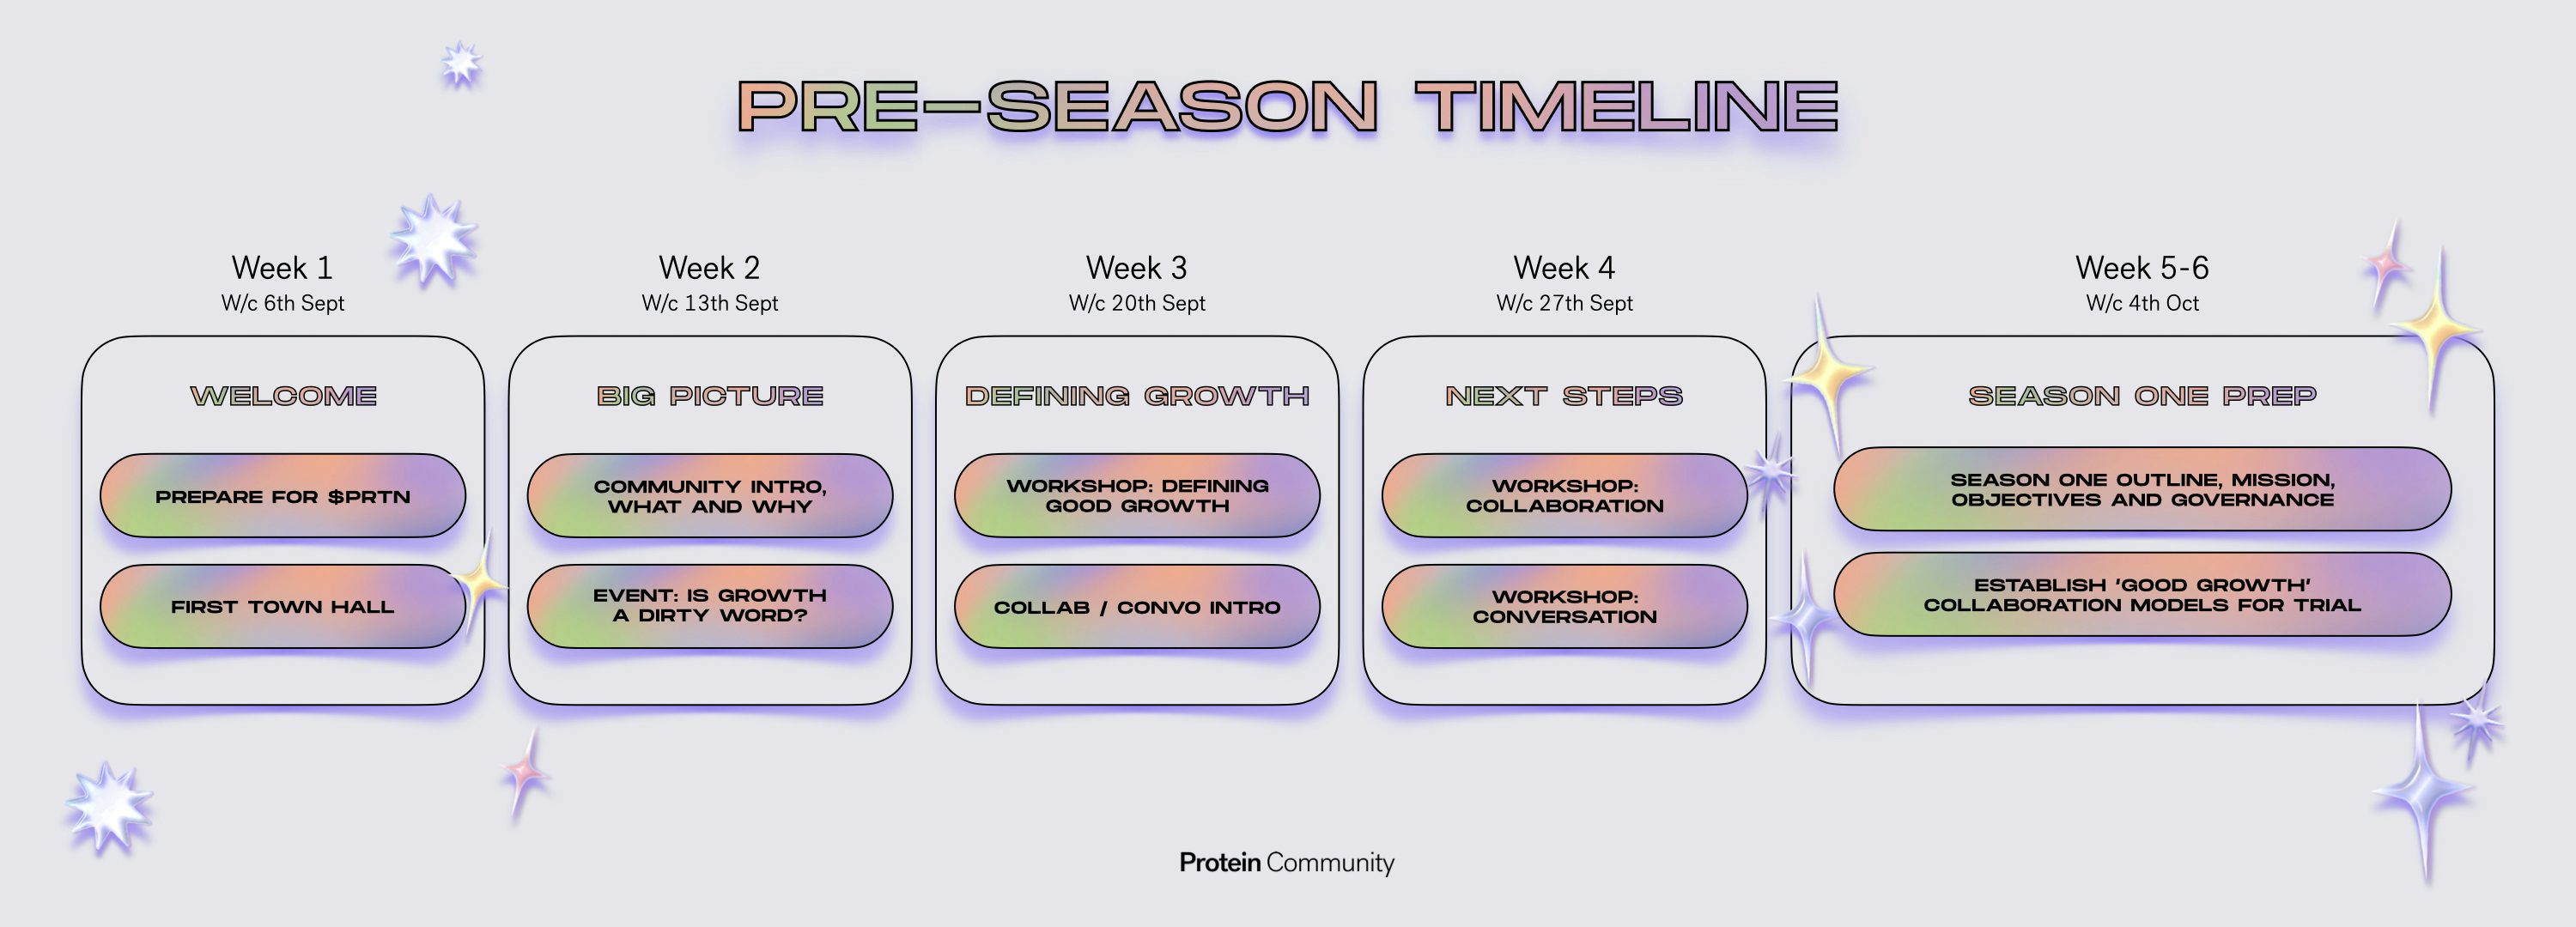 Pre-Season Timeline